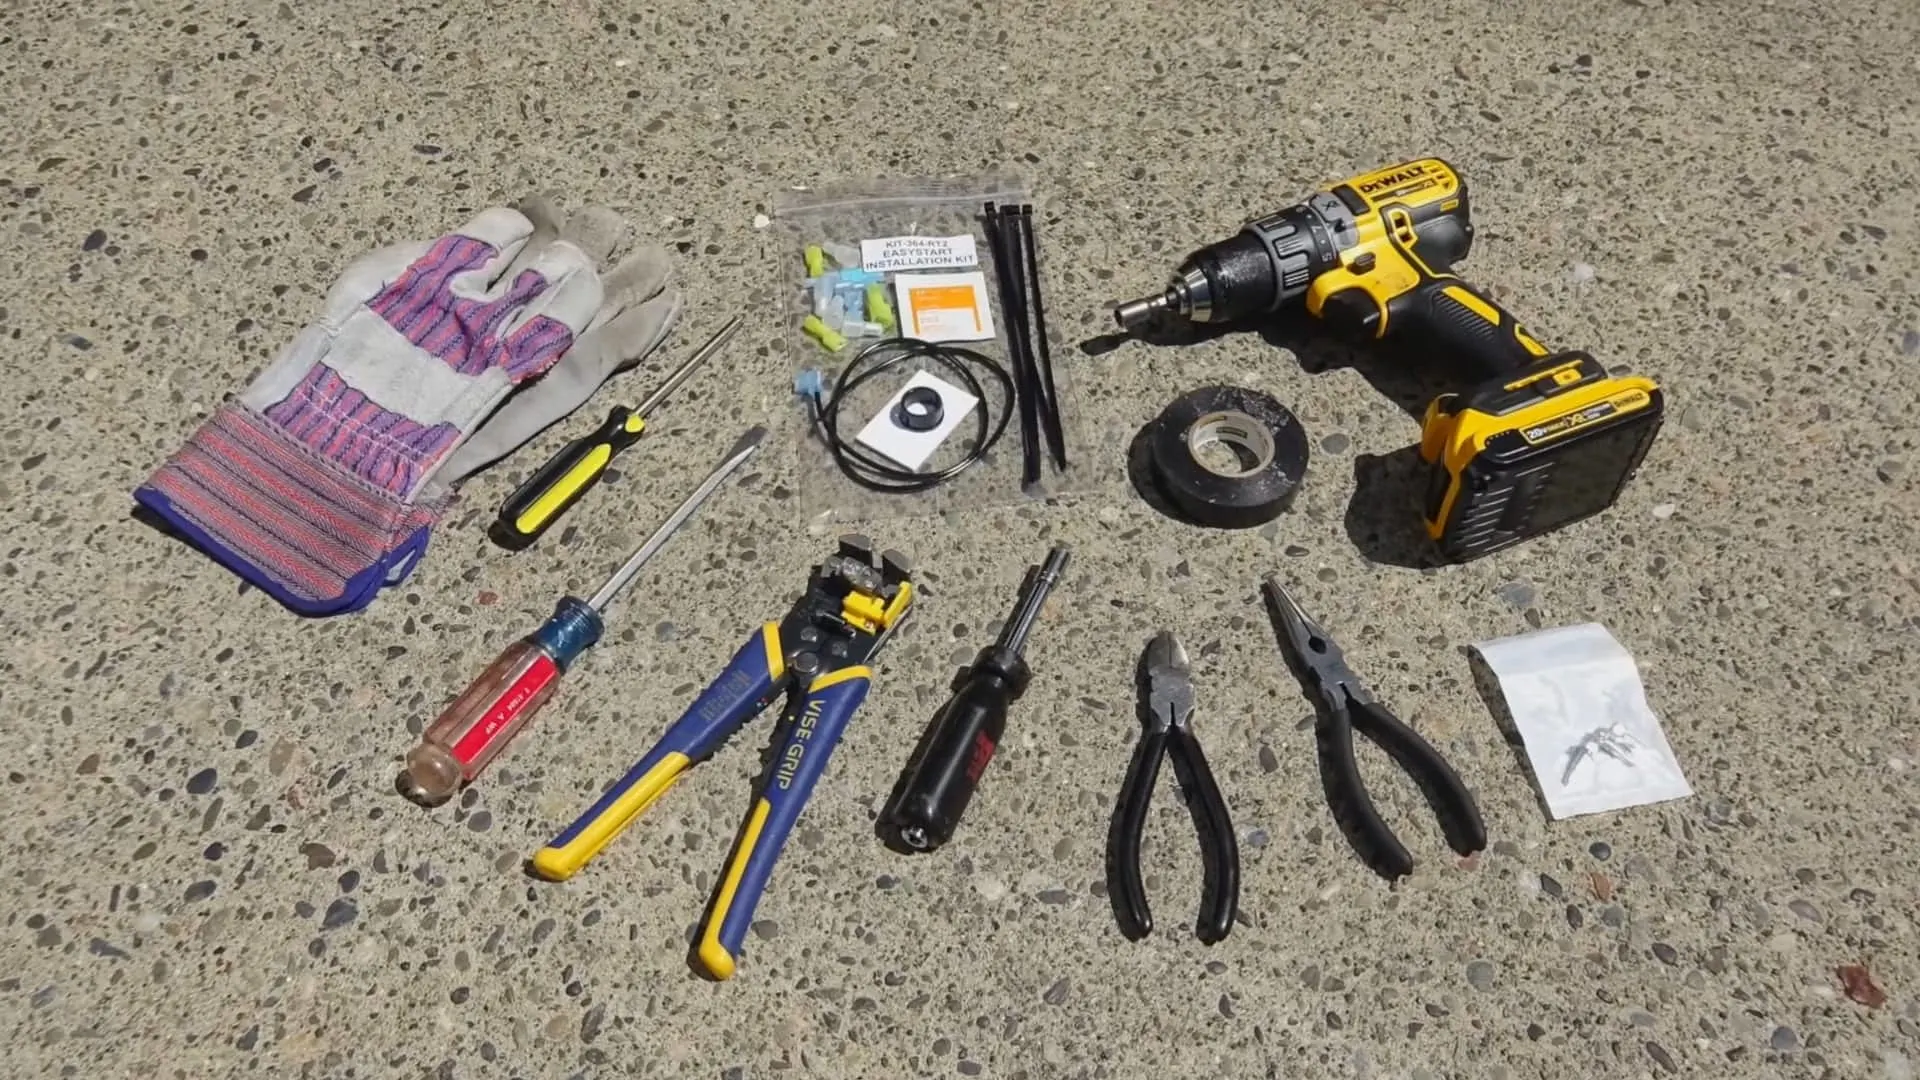 Tools for installing the Micro-Air EasyStart soft-start kit